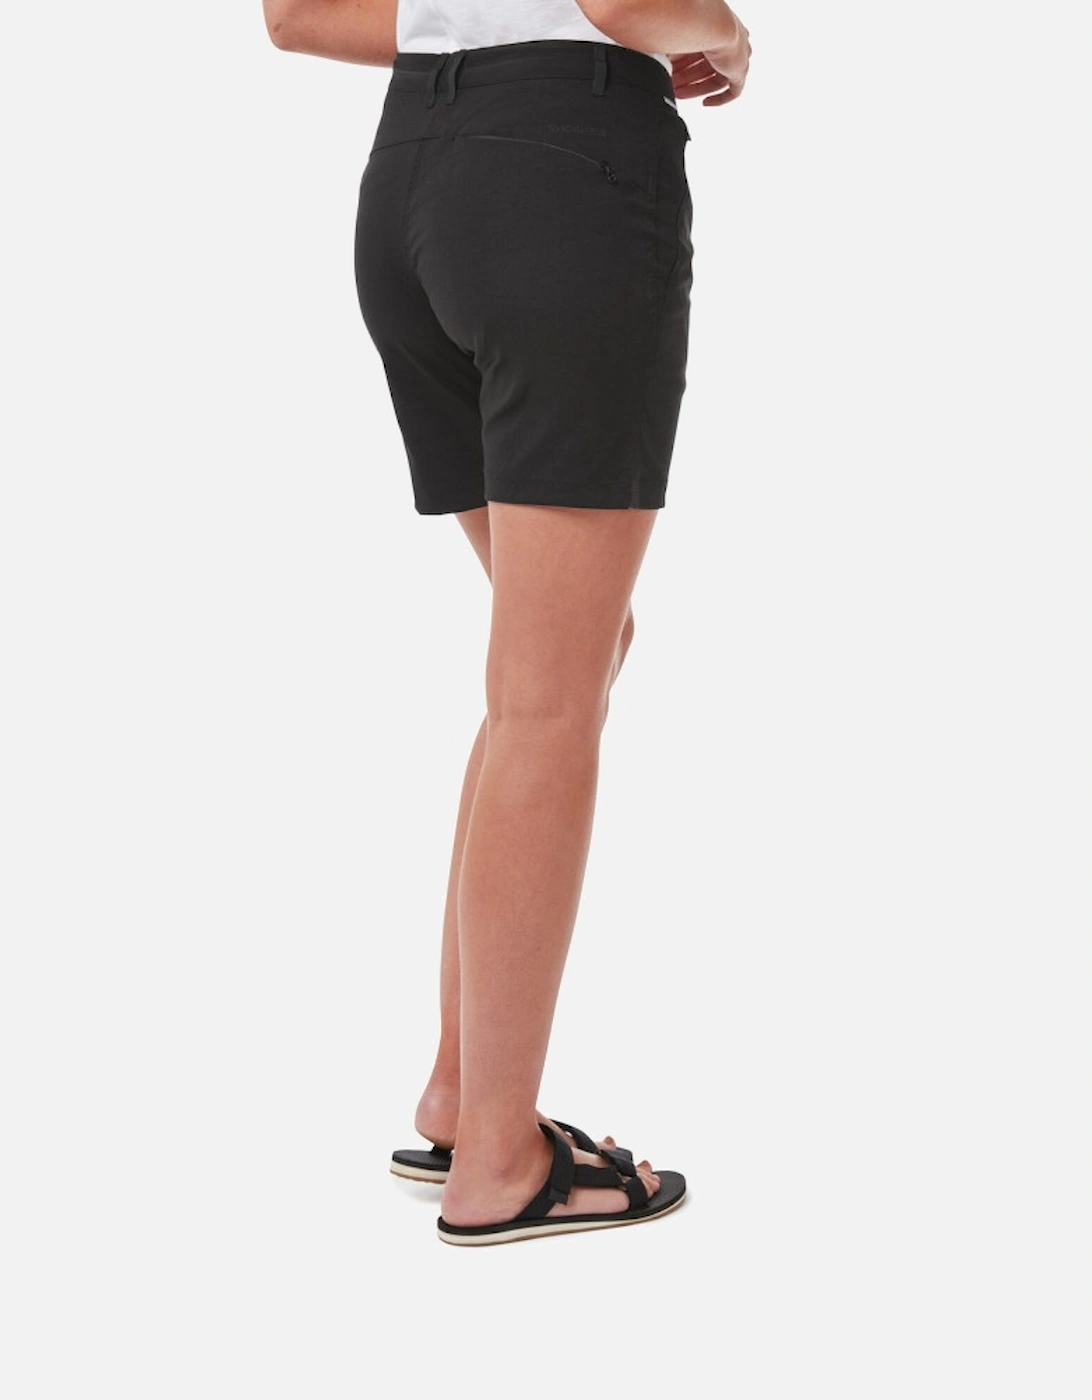 Womens Kiwi Pro Smartdry Walking Shorts